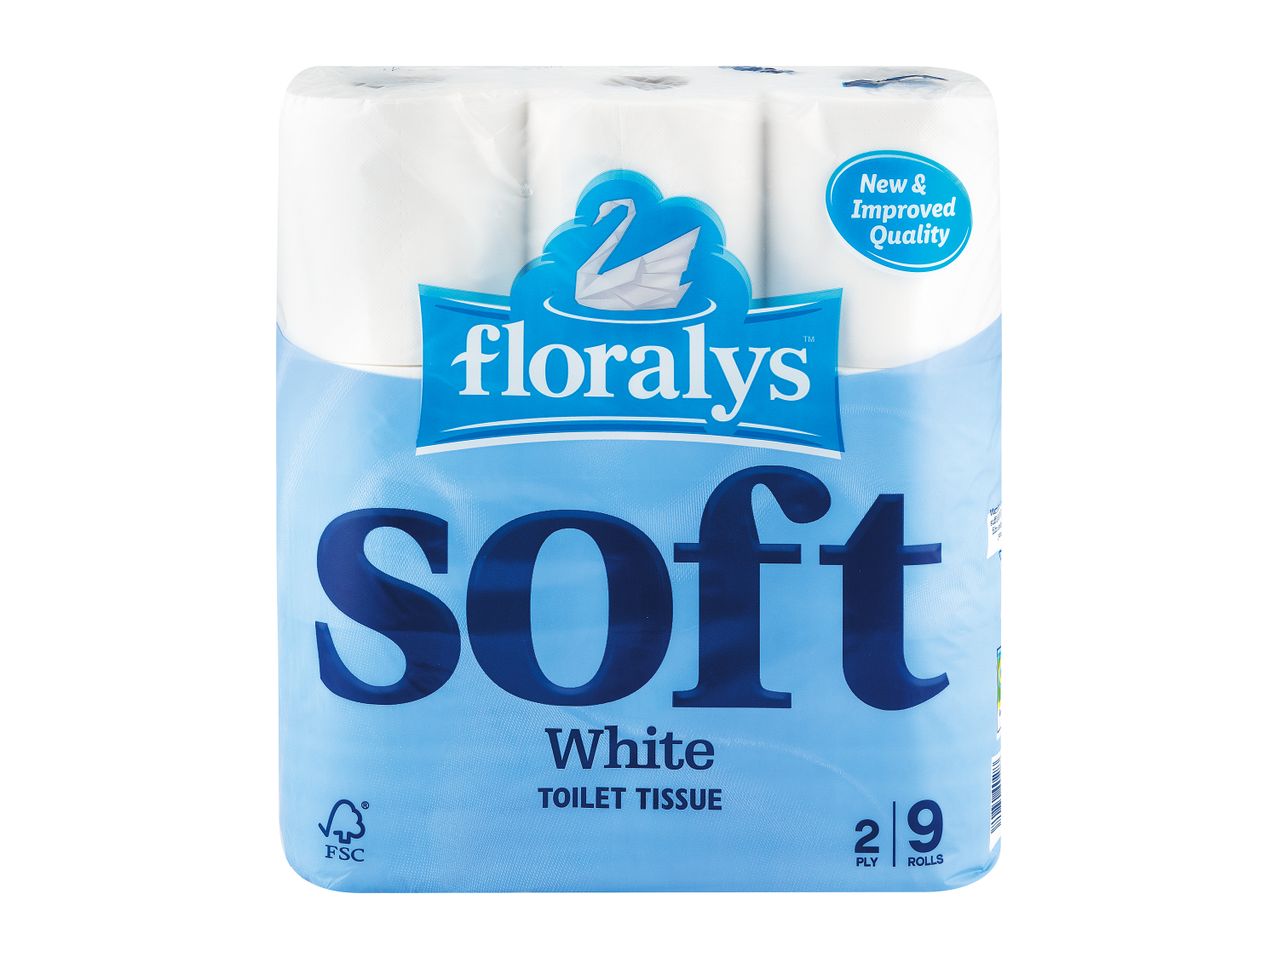 Go to full screen view: Floralys Standard White Toilet Tissue - Image 1